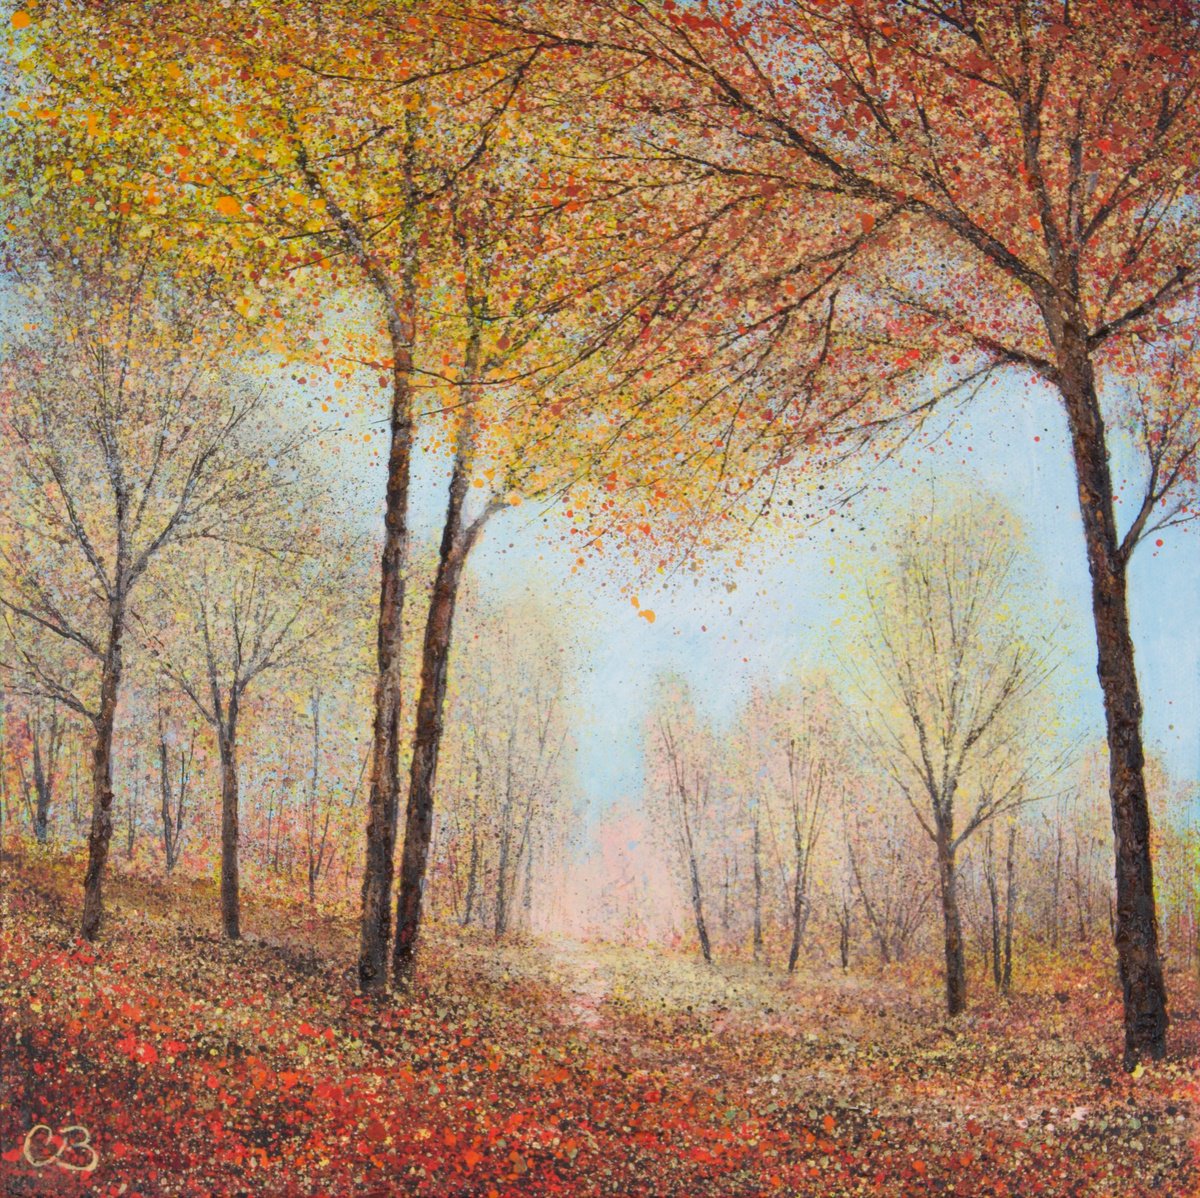 Through The Autumn Colours by Chris Bourne